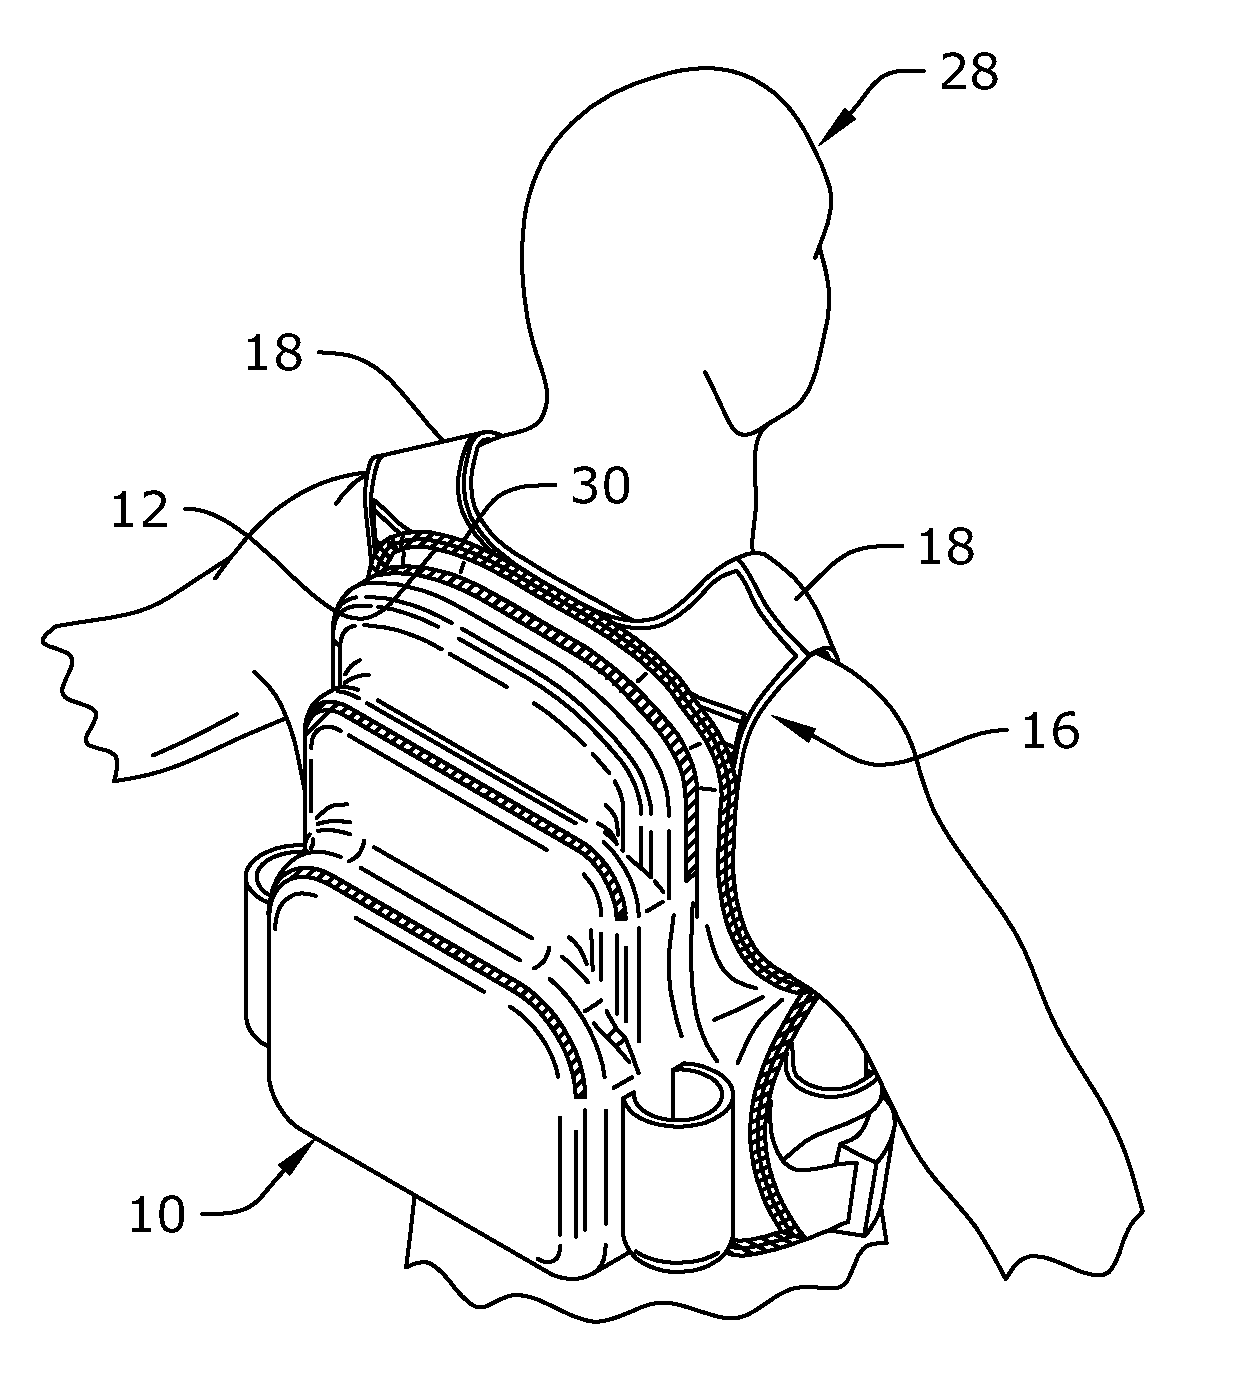 Bullet proof vest with backpack